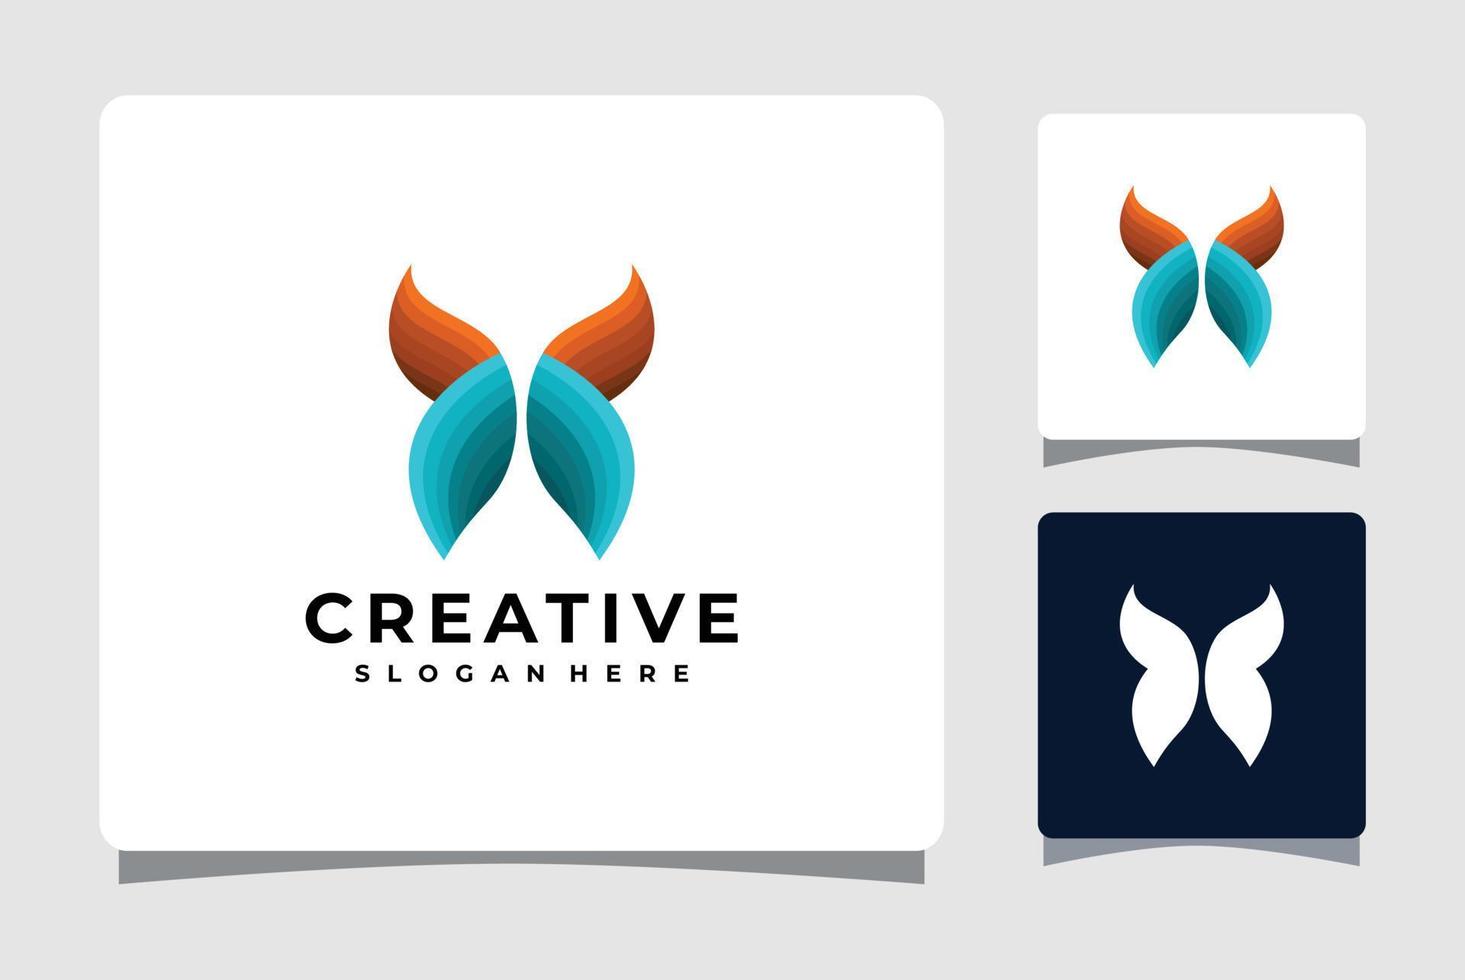 Blue Butterfly Logo Template Design Inspiration vector